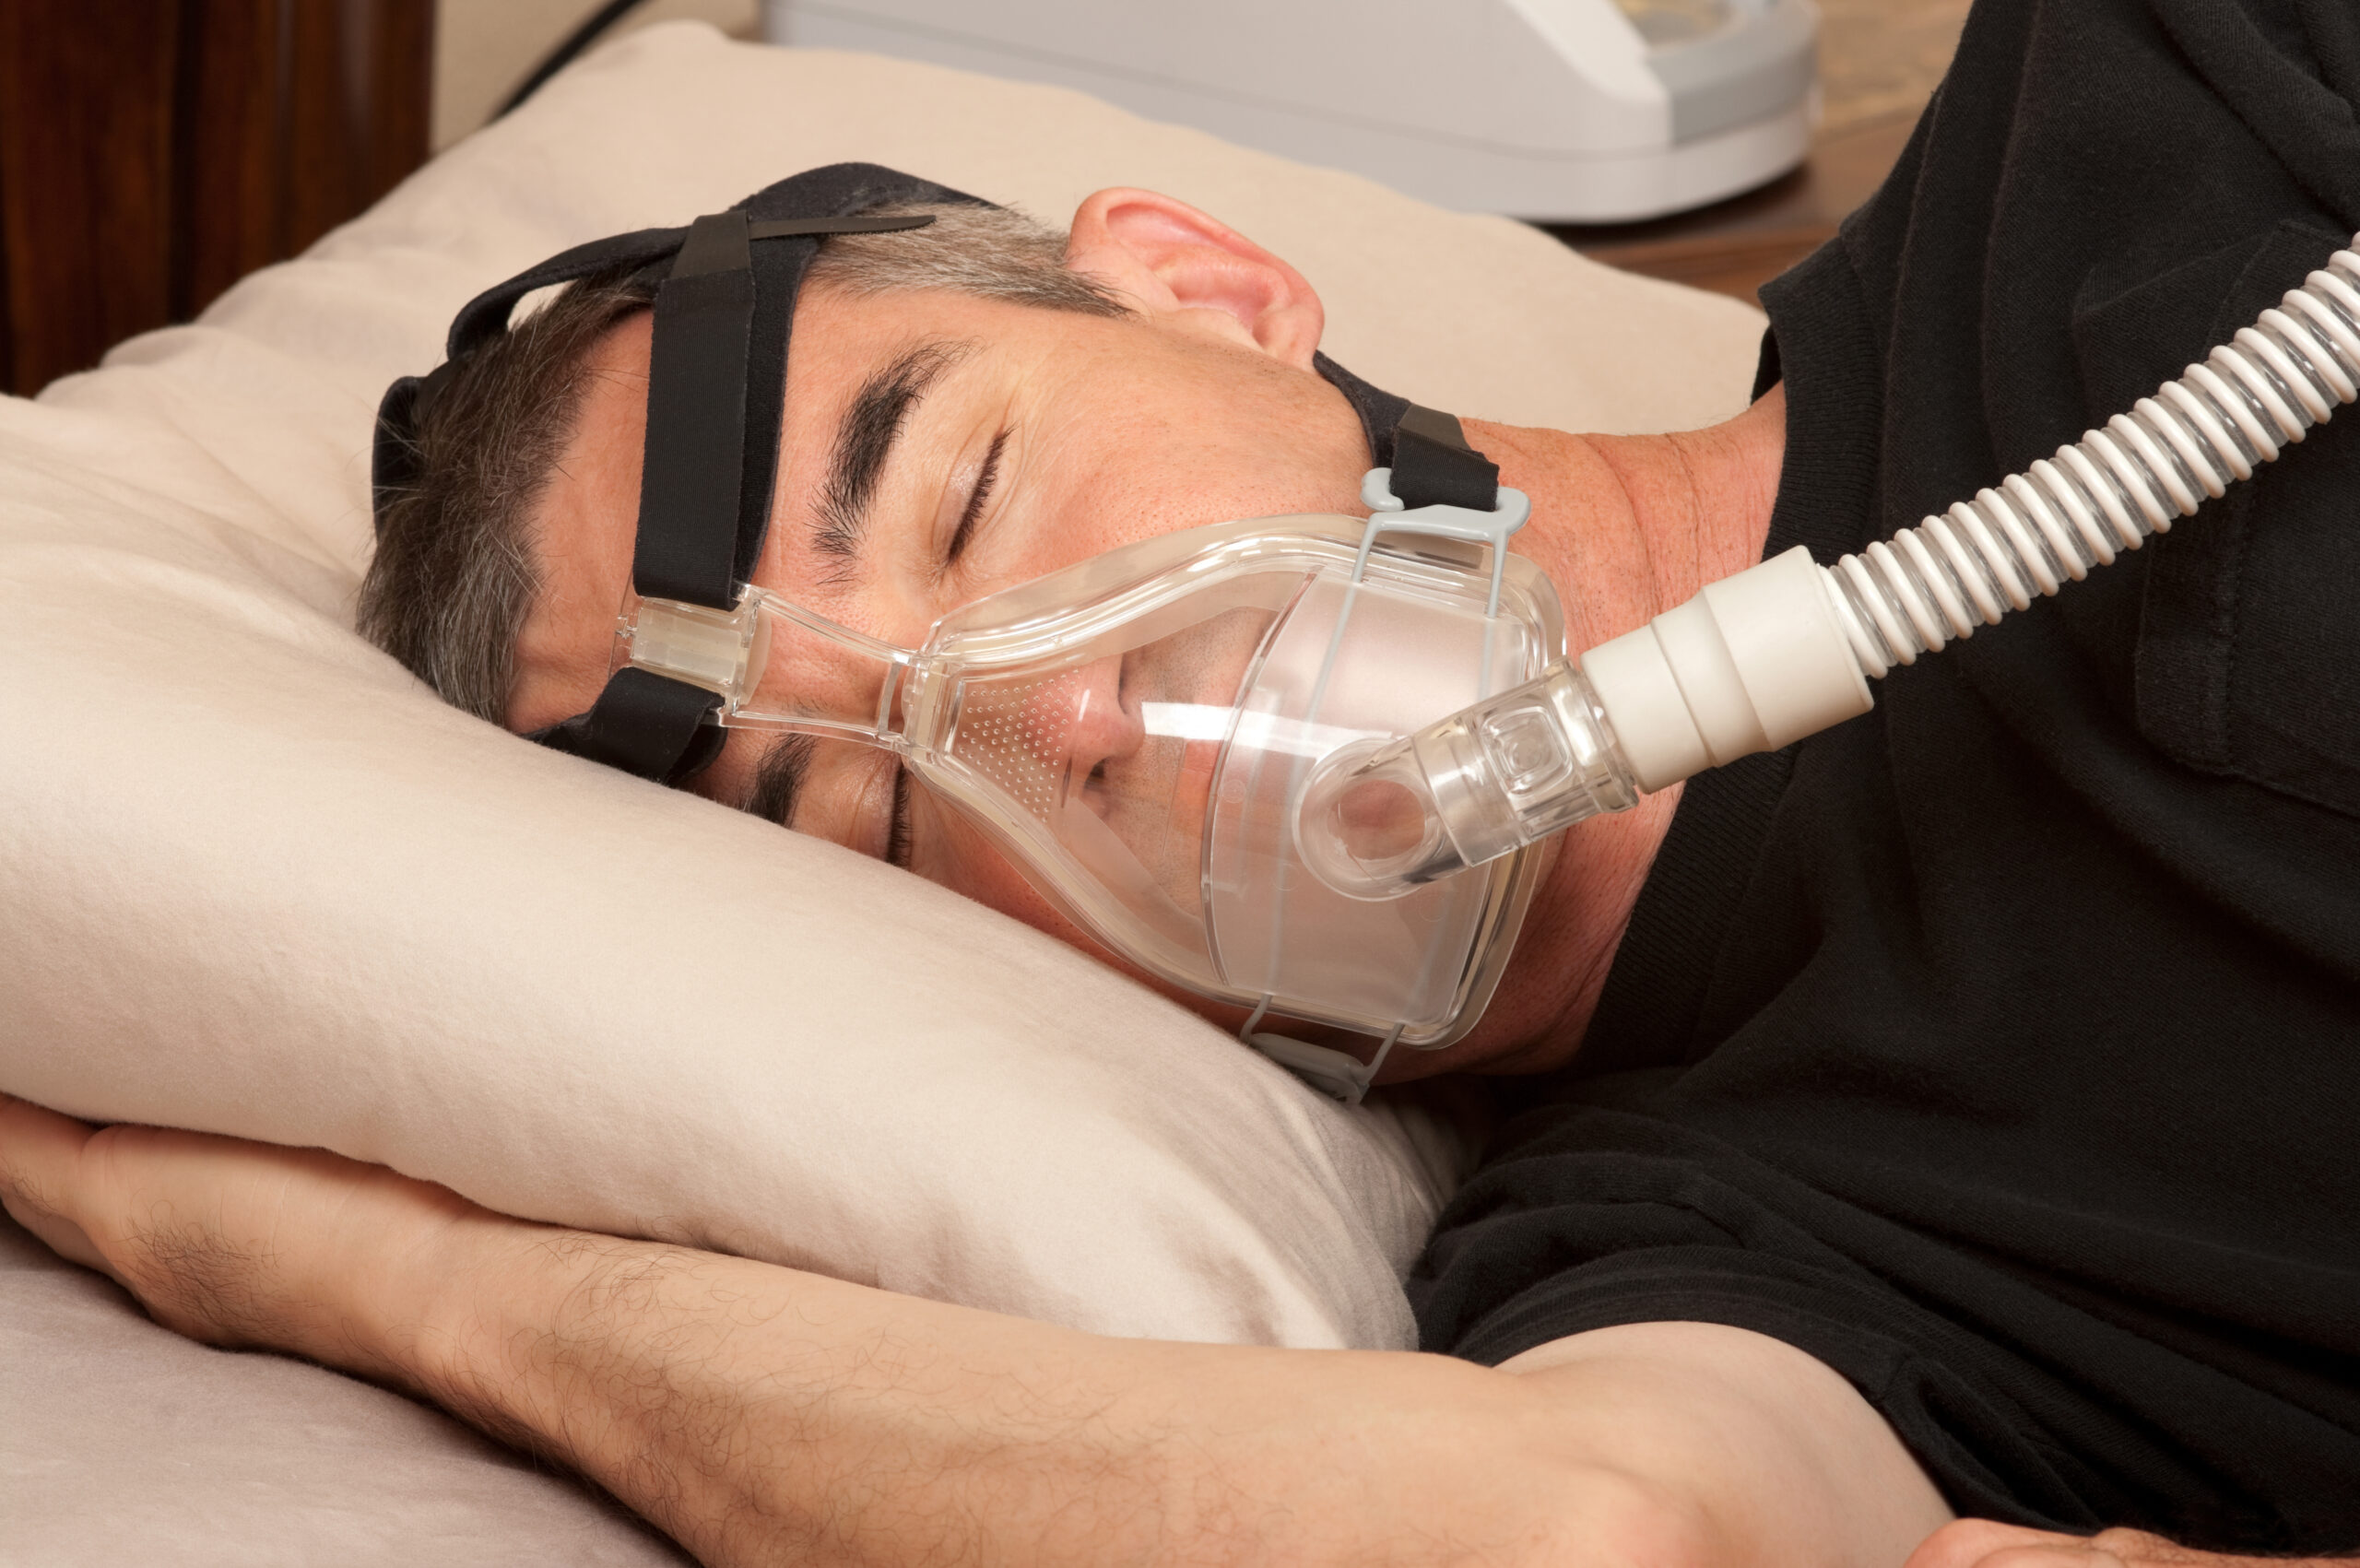 Israeli scientists say there's an upside to sleep apnea. (Shutterstock.com)